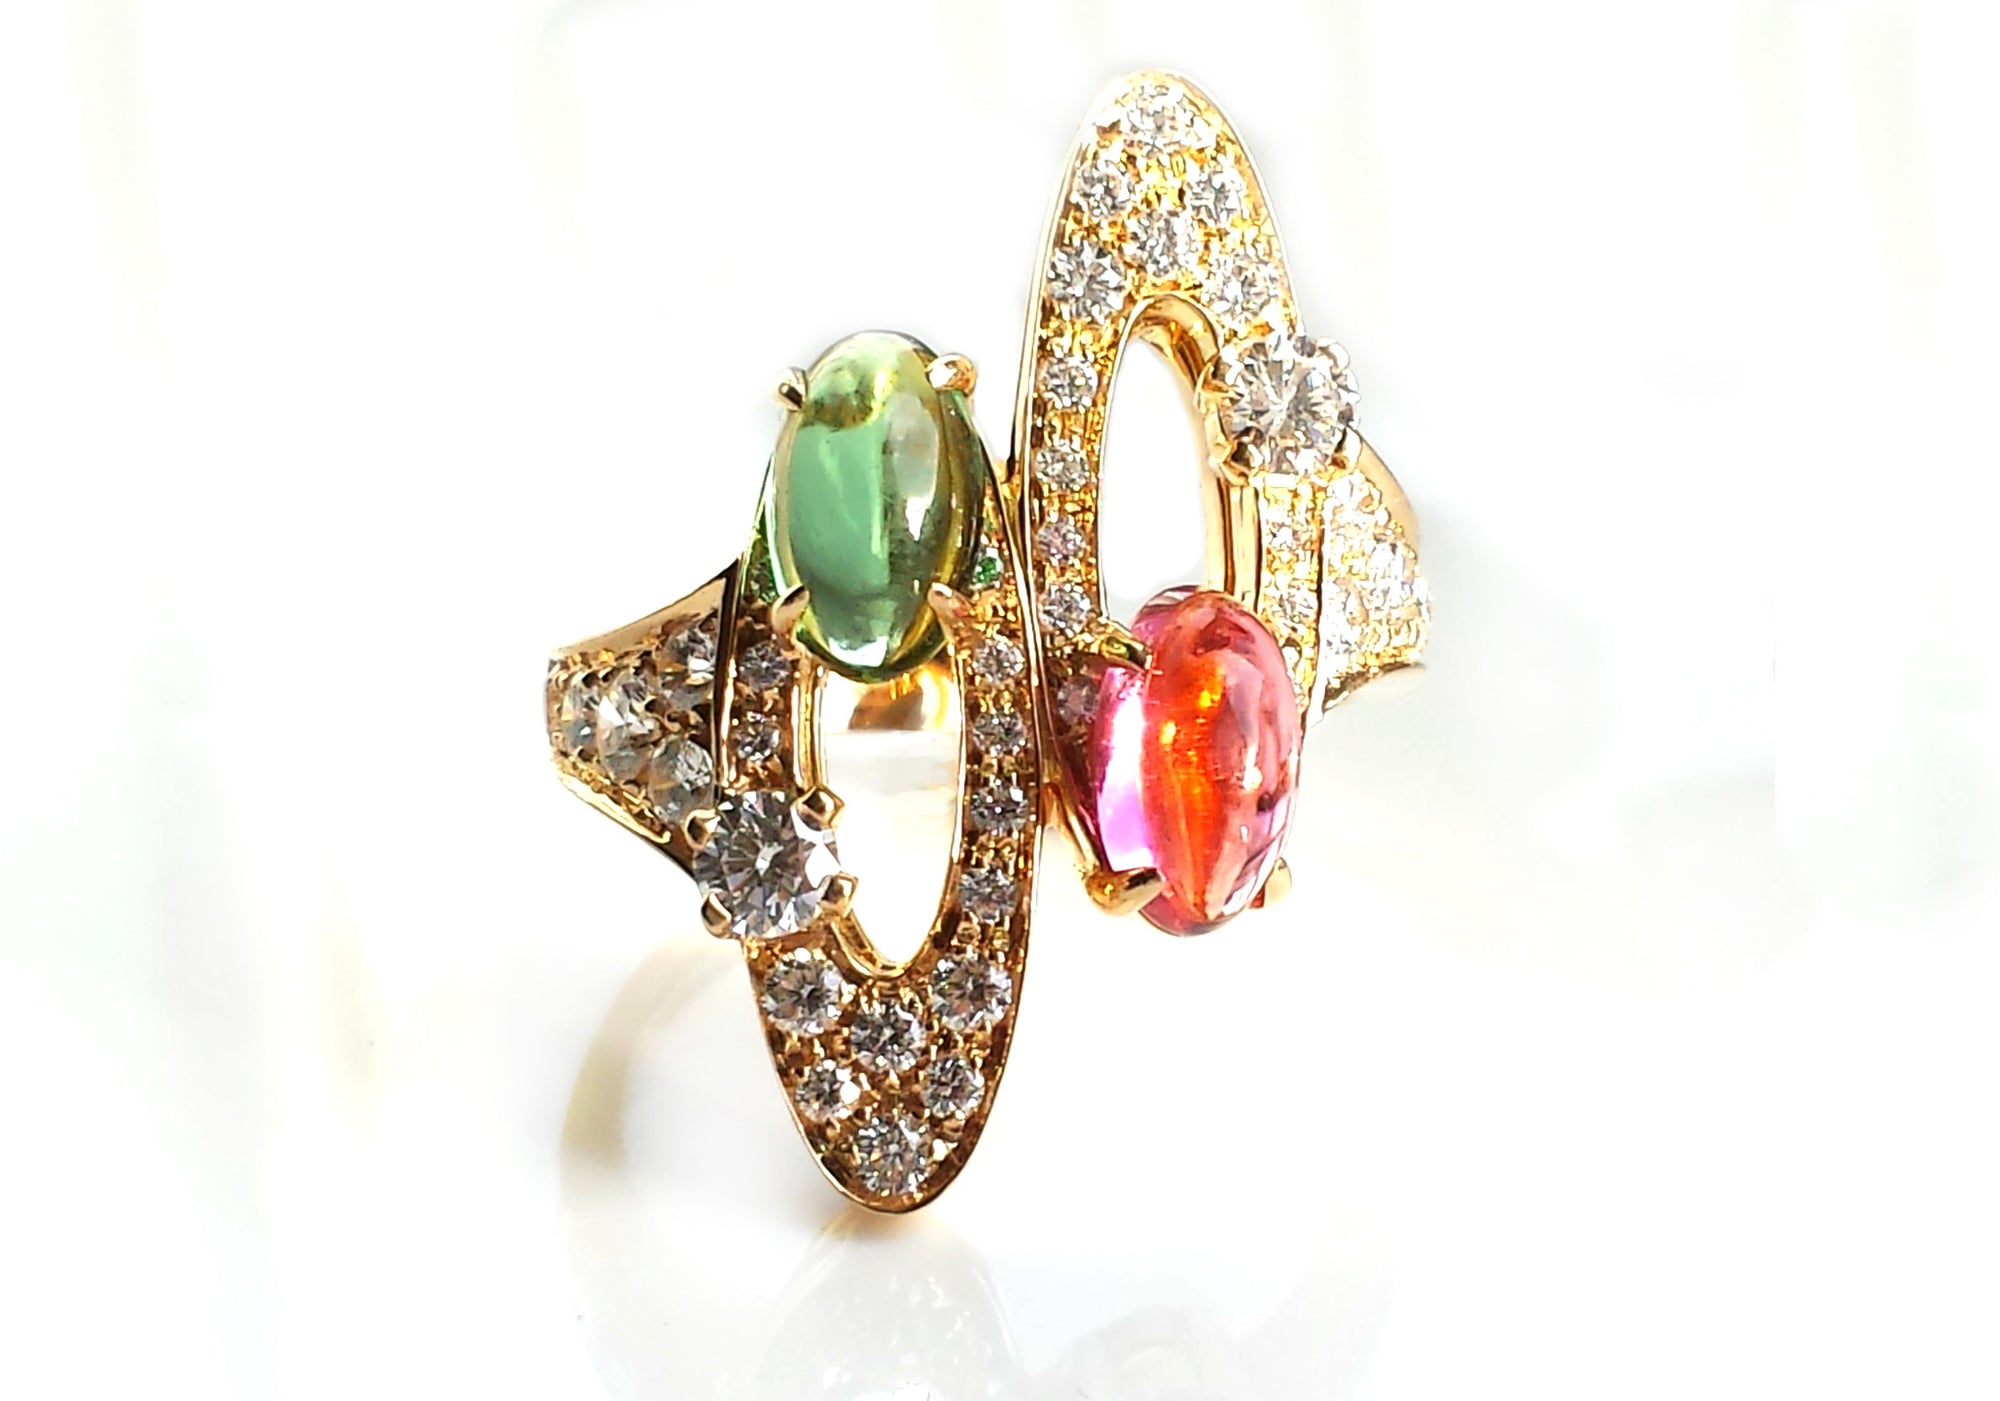 Bulgari 'Elisia' 18k Yellow Gold Ring with Diamonds & Green and Red Tourmaline Gemstones